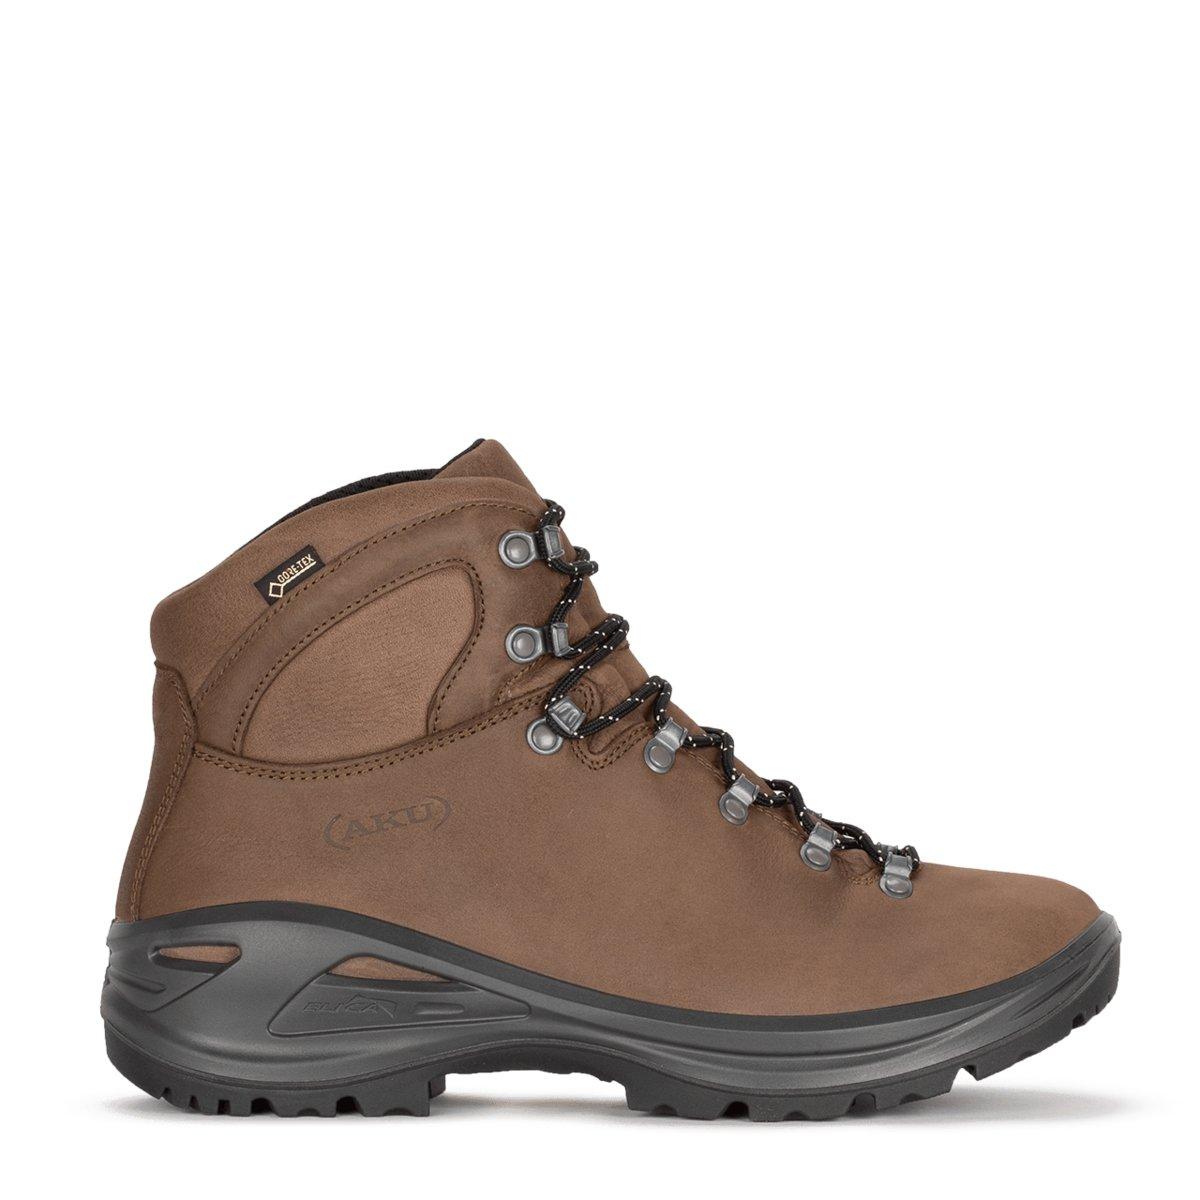 AKU Tribute 2 GORE-TEX Hiking Boots - Brown